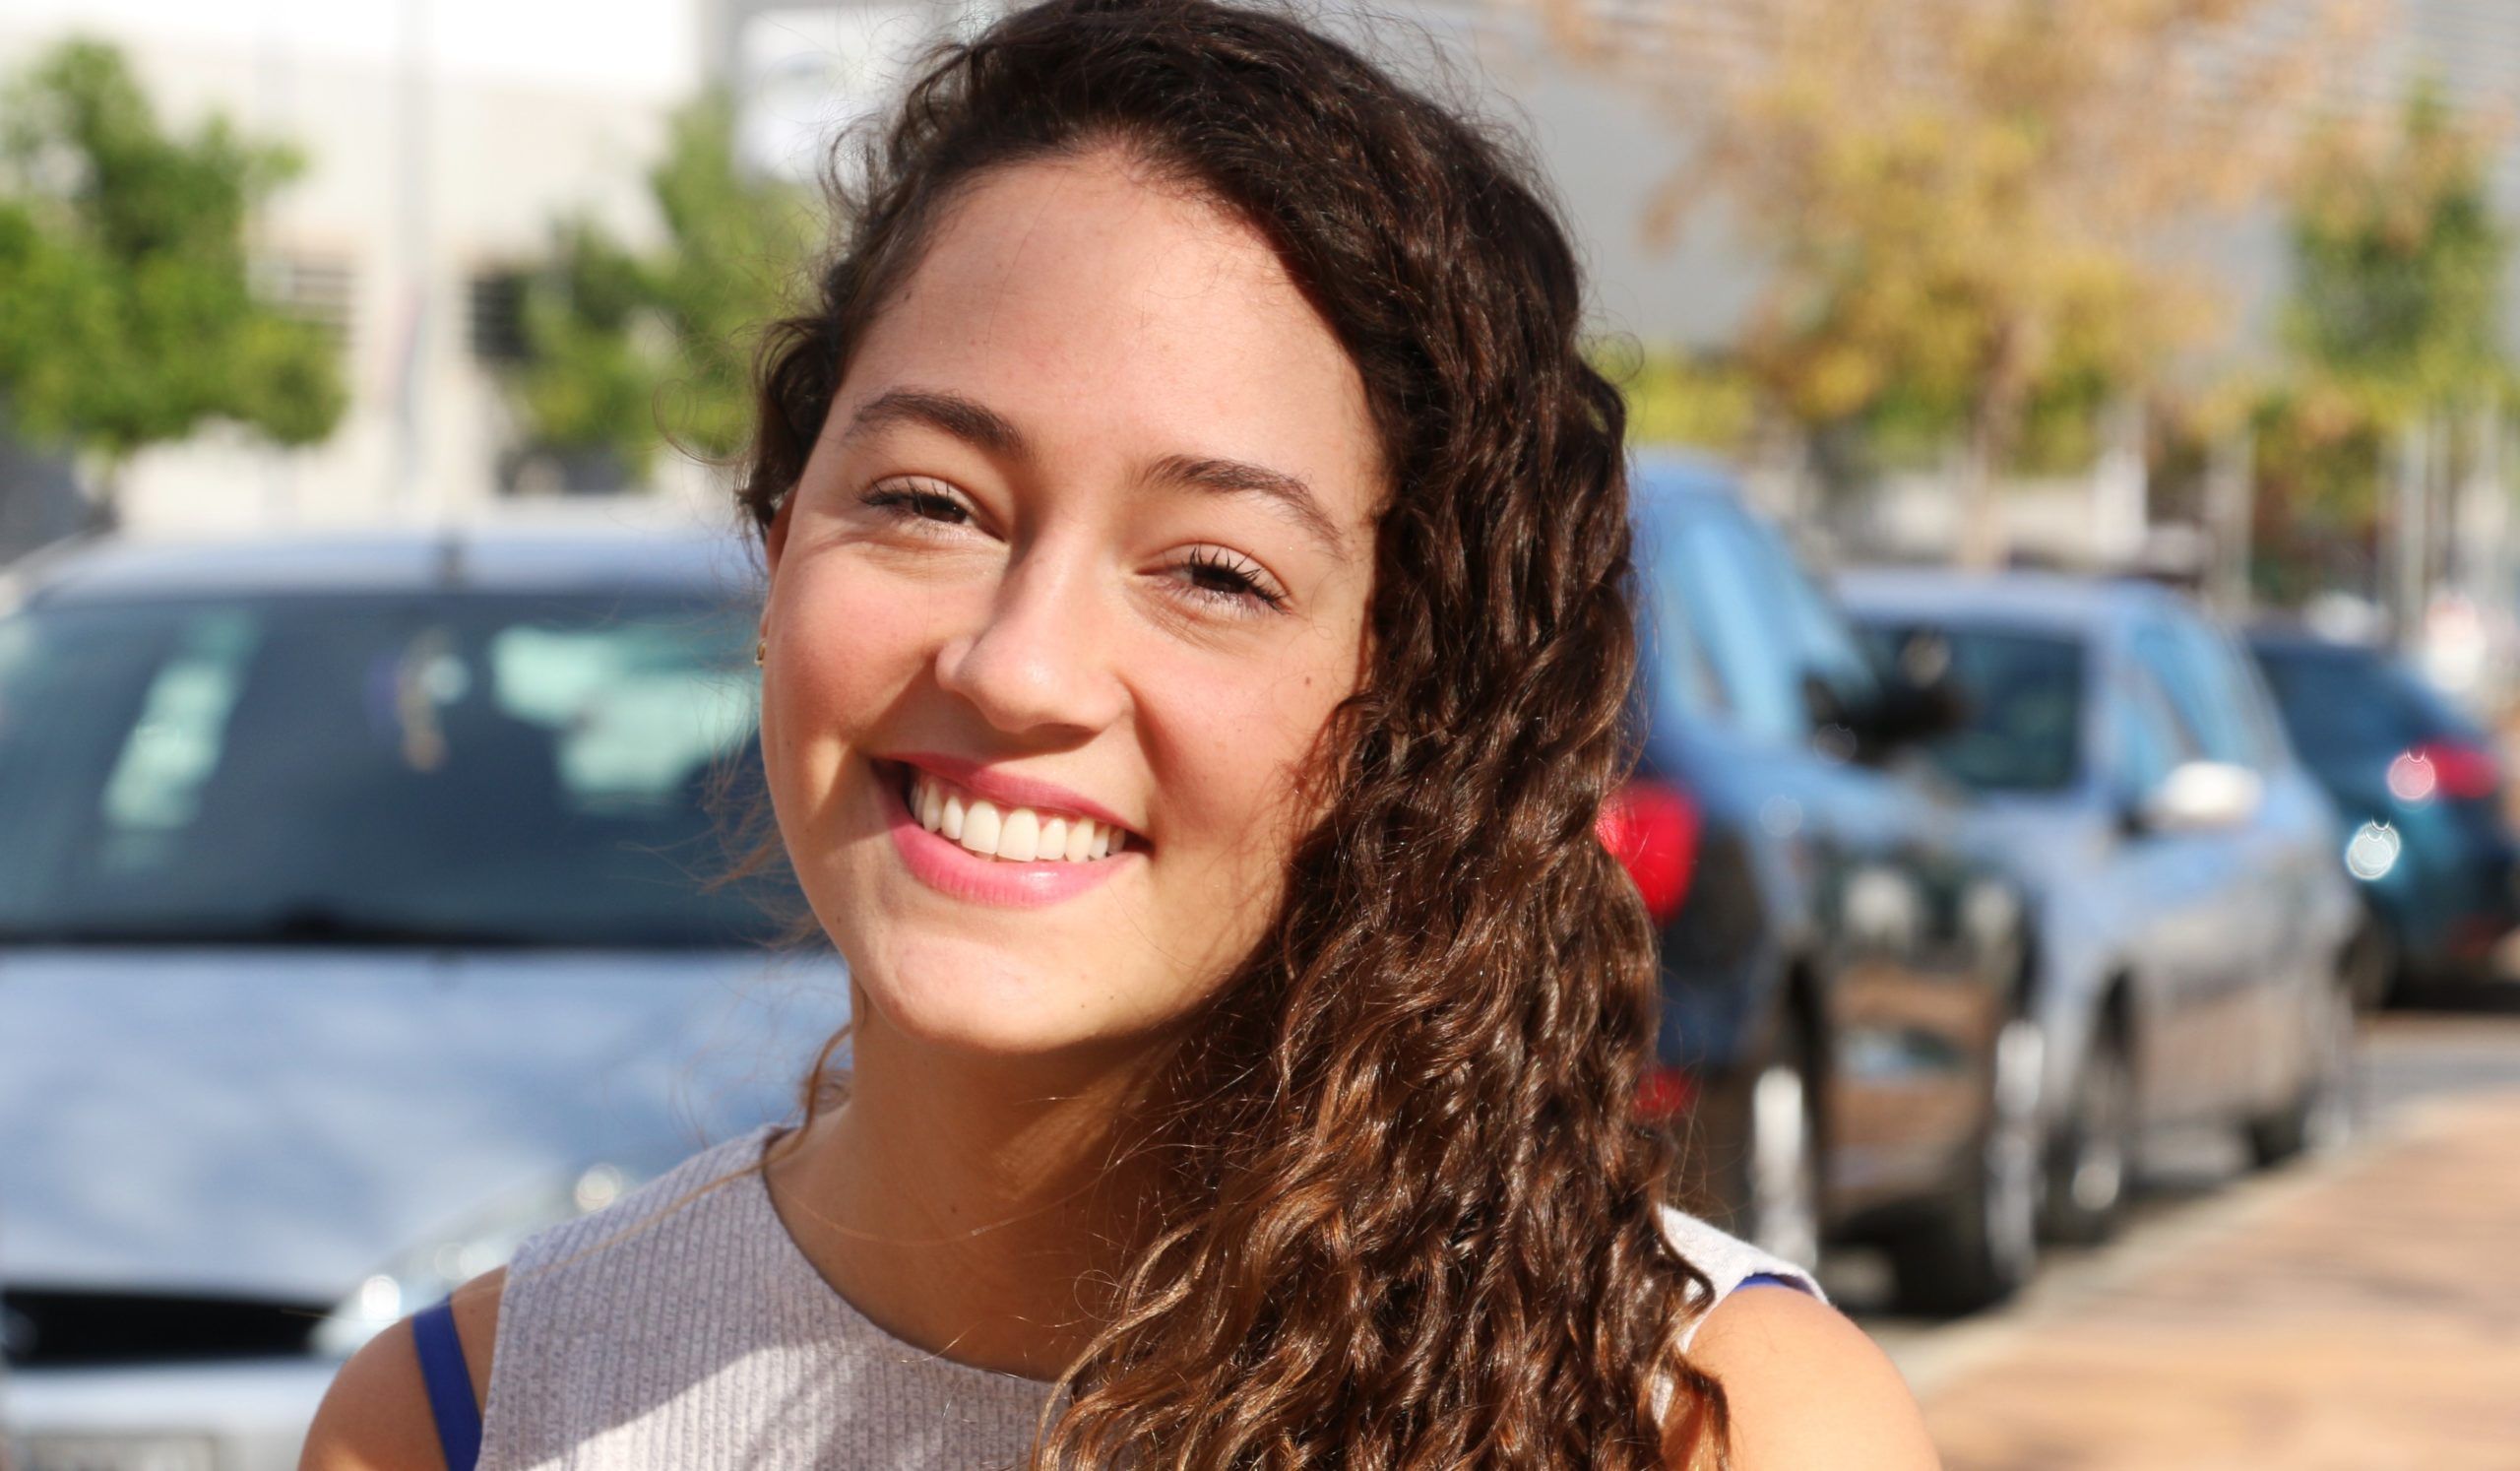 Livia, a Swiss student at CEU Valencia